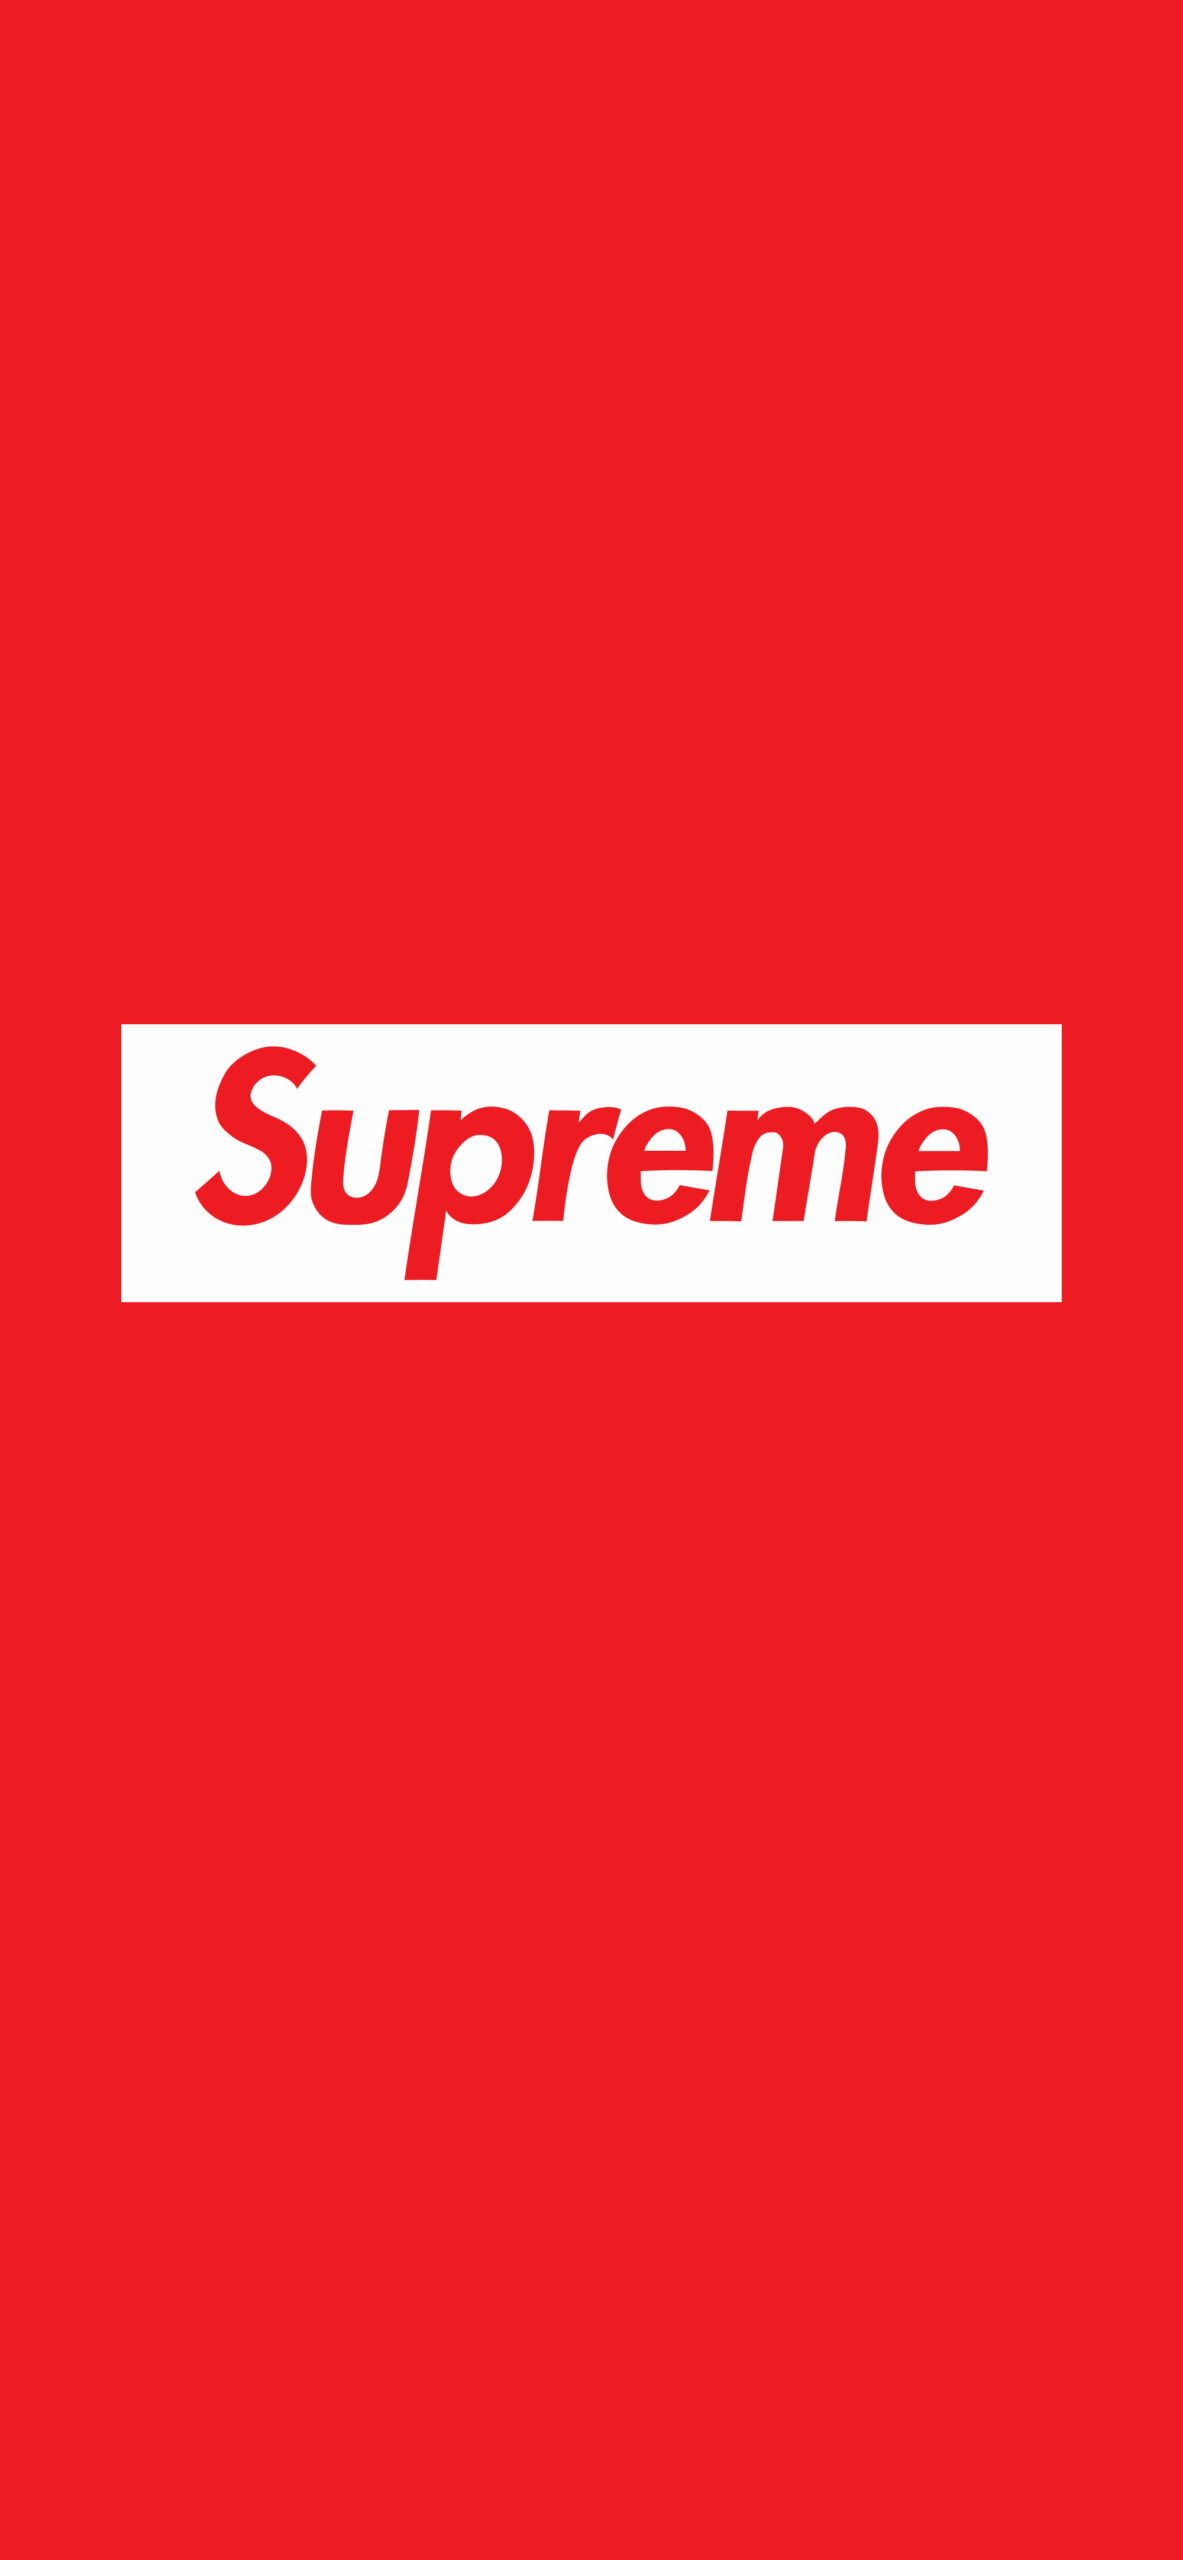 supreme logo red wallpaper